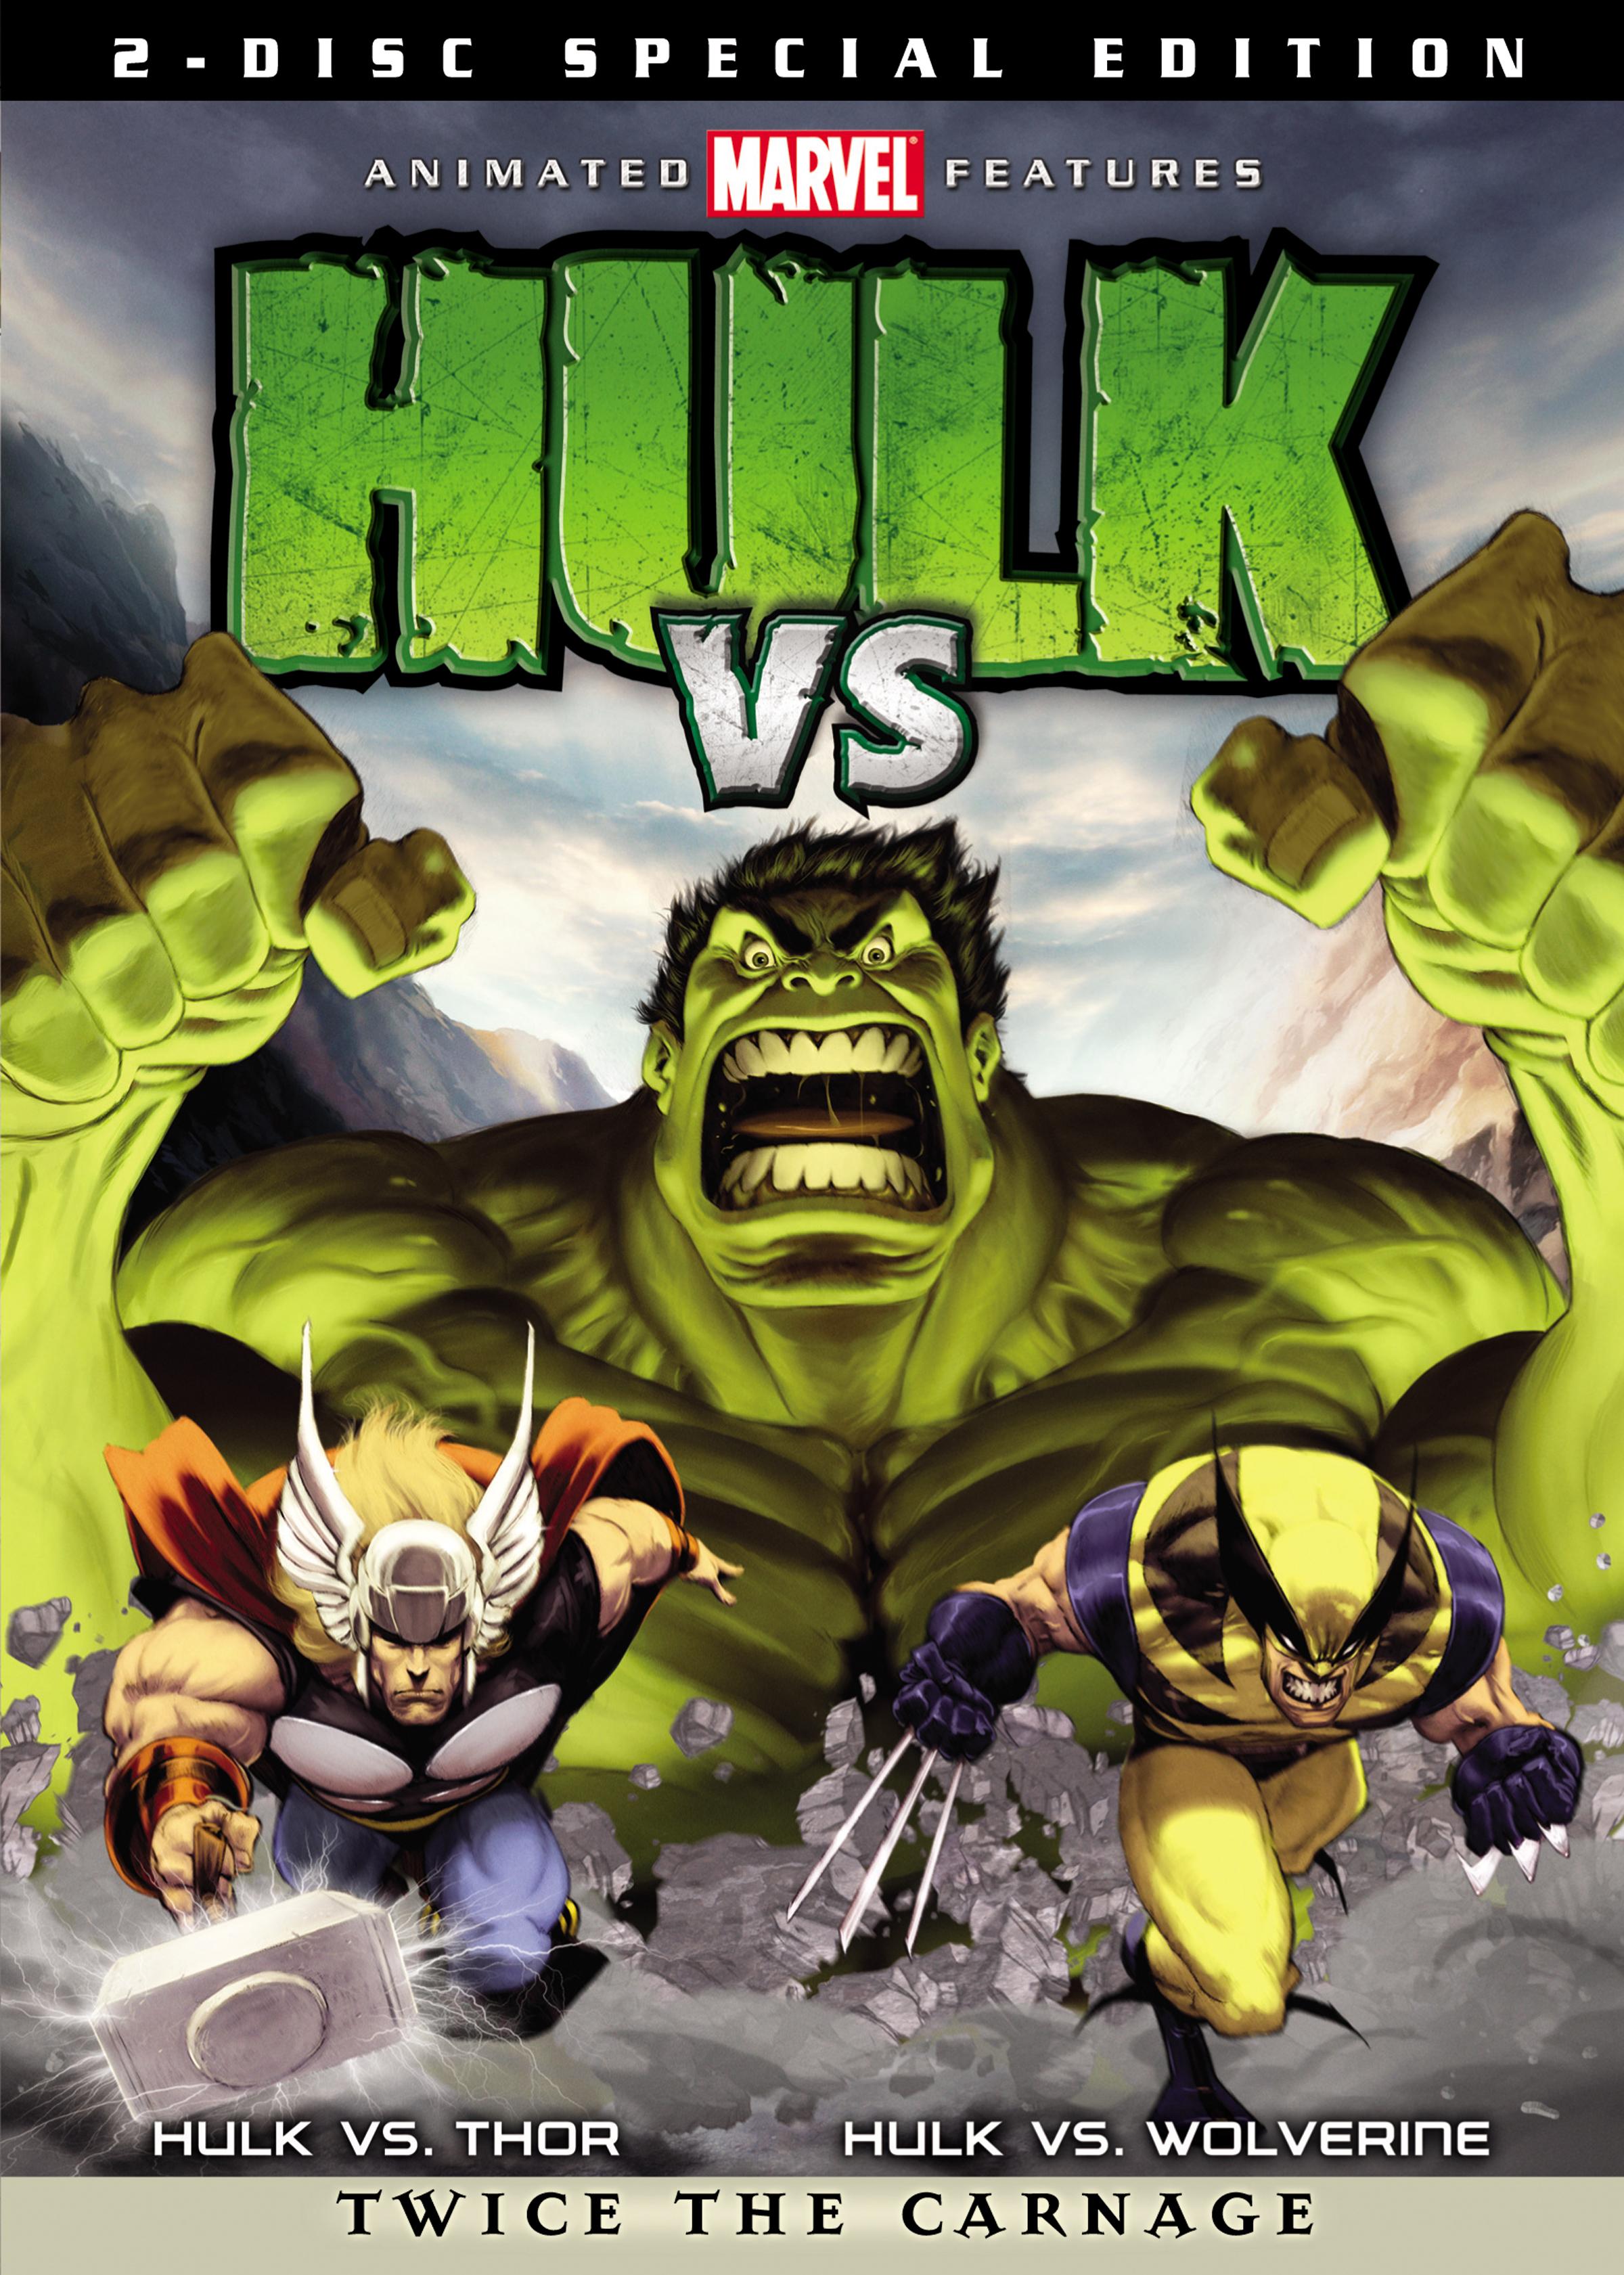 Hulk Vs. (2009)